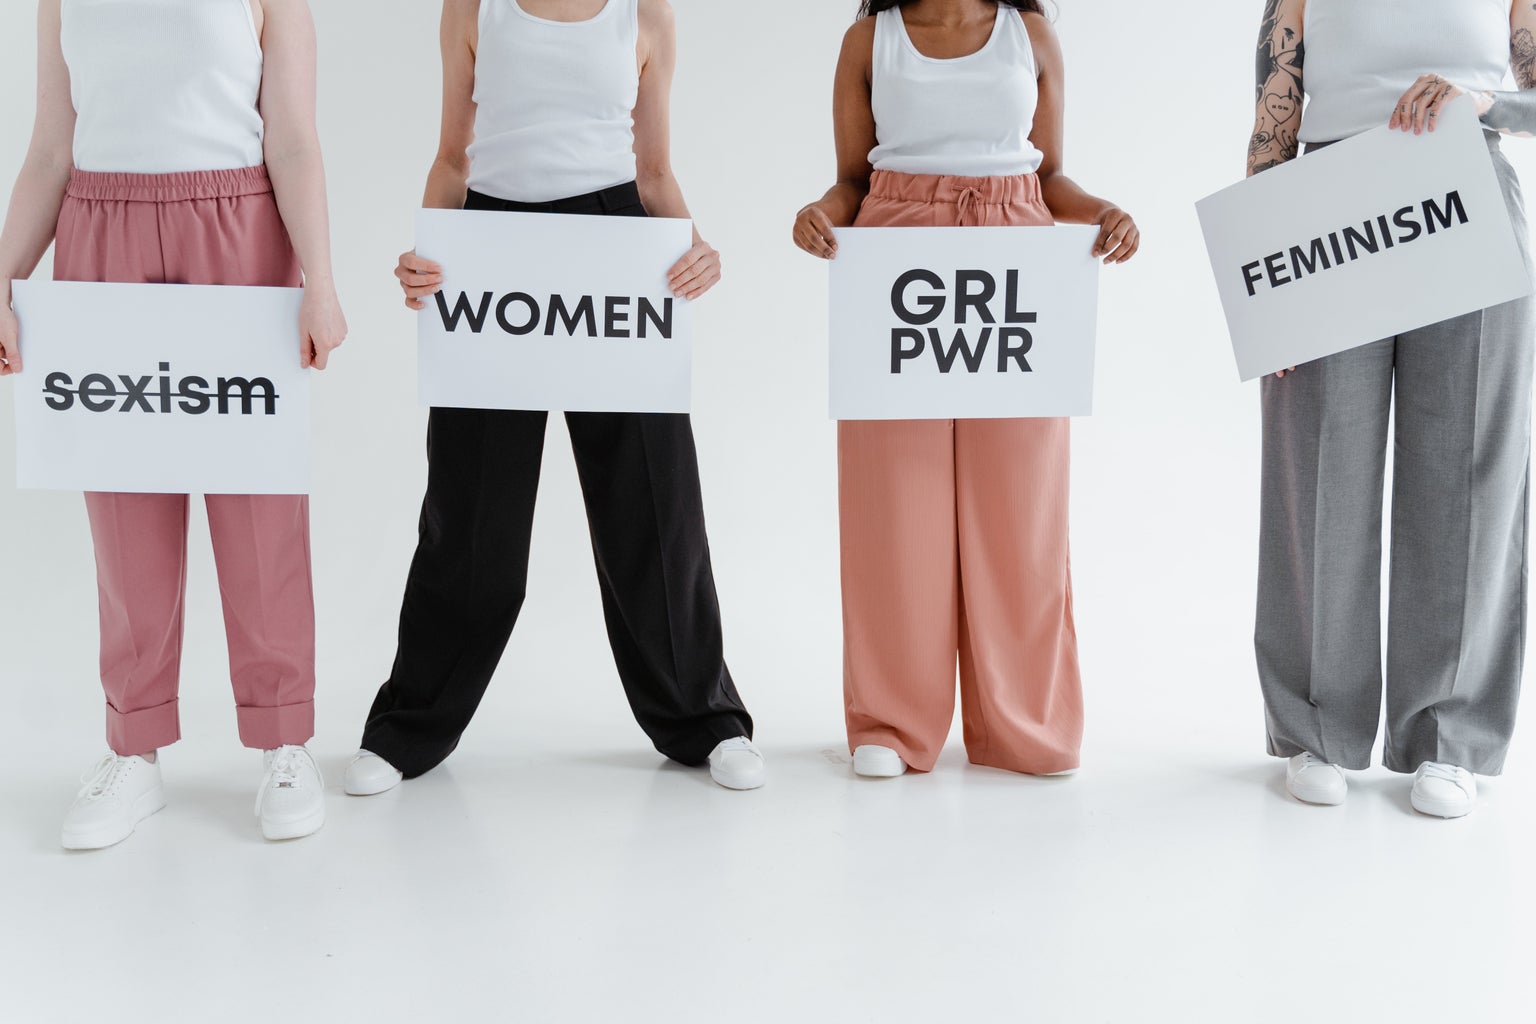 women holding cardboard signs